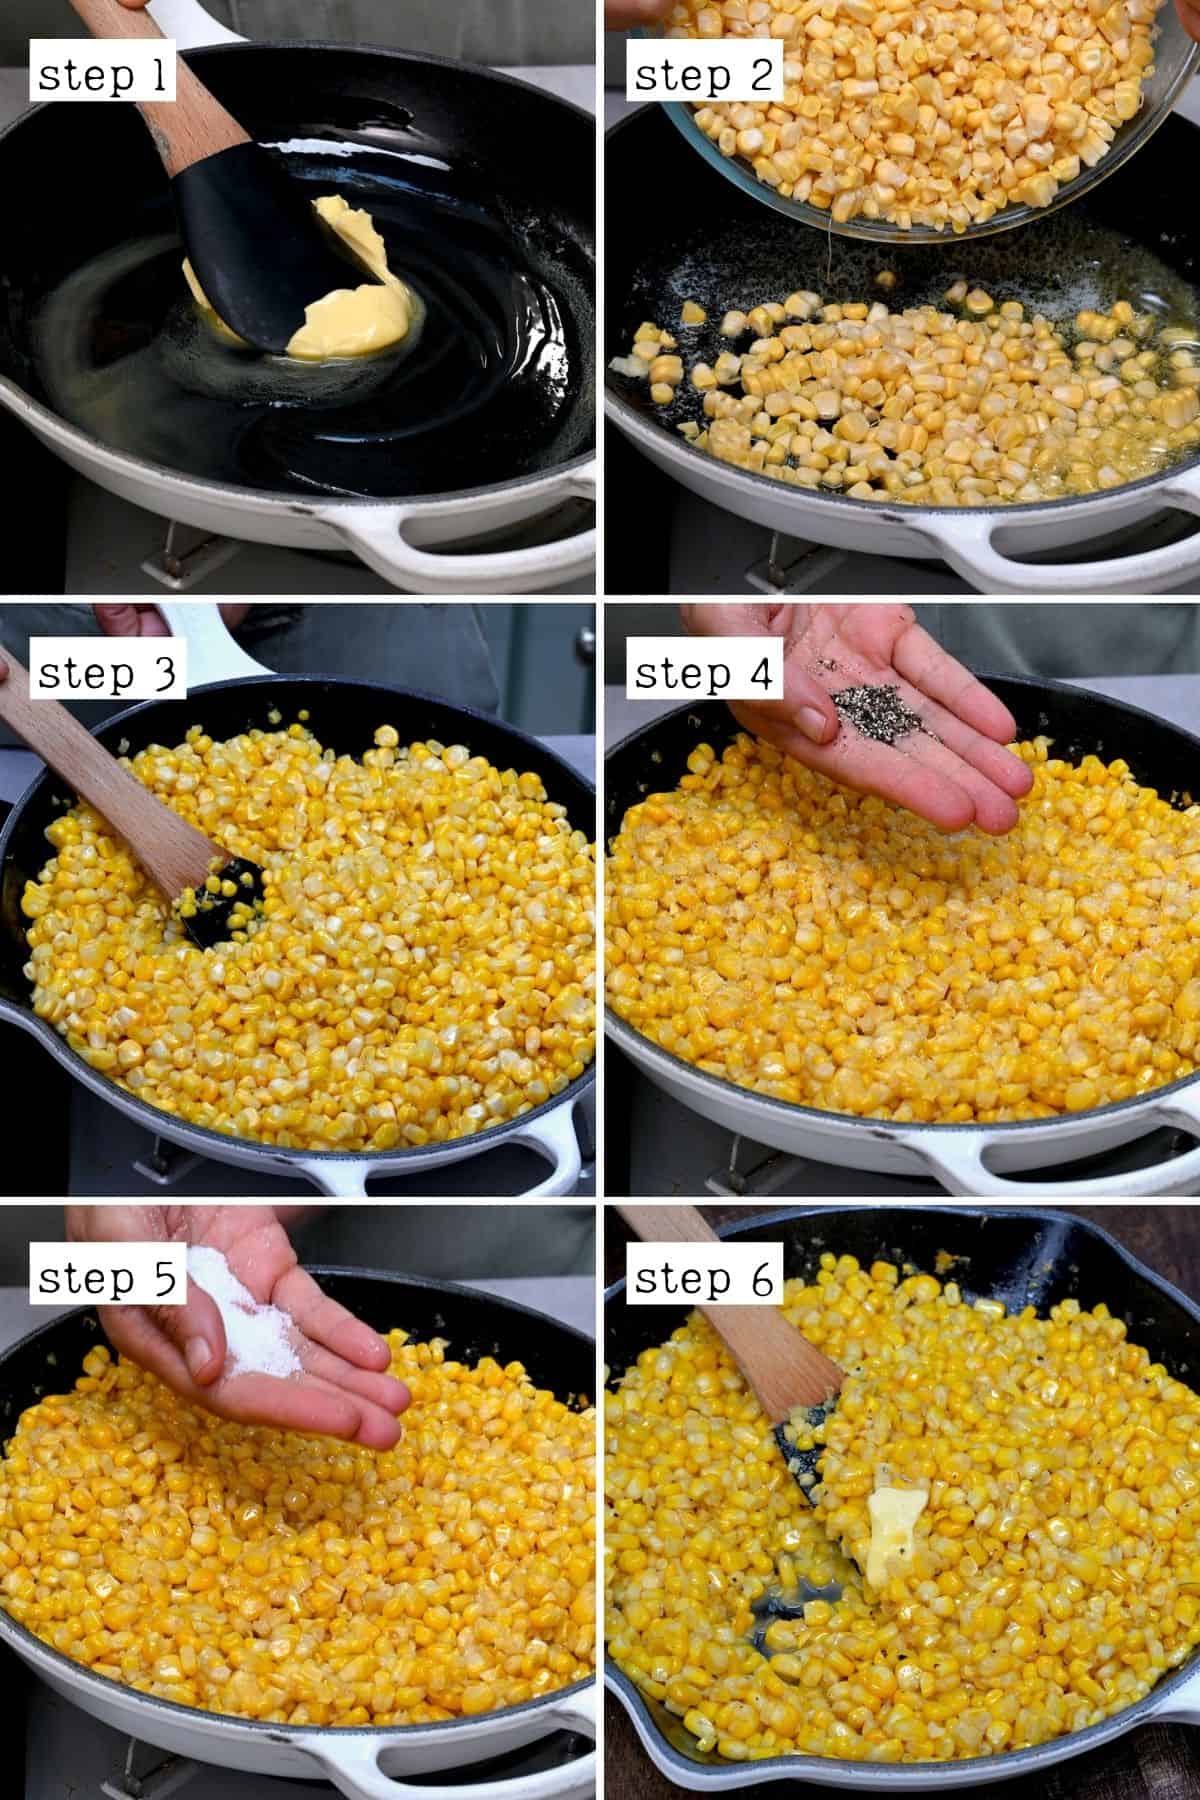 Steps for making fried corn